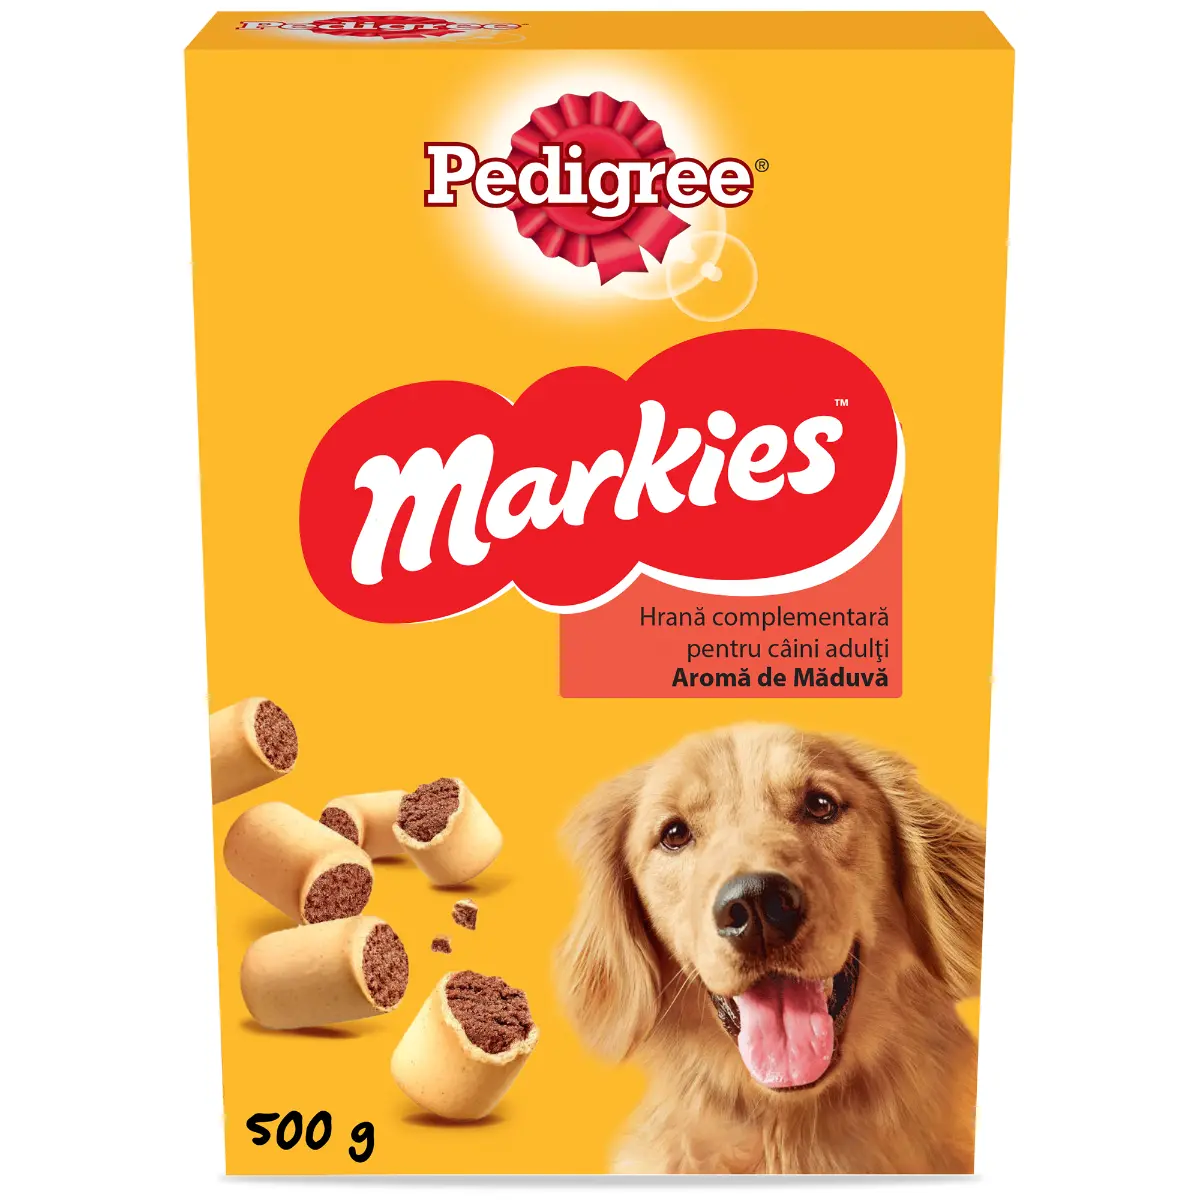 Hrana complementara Pedigree Markies pentru caini adulti 500 g